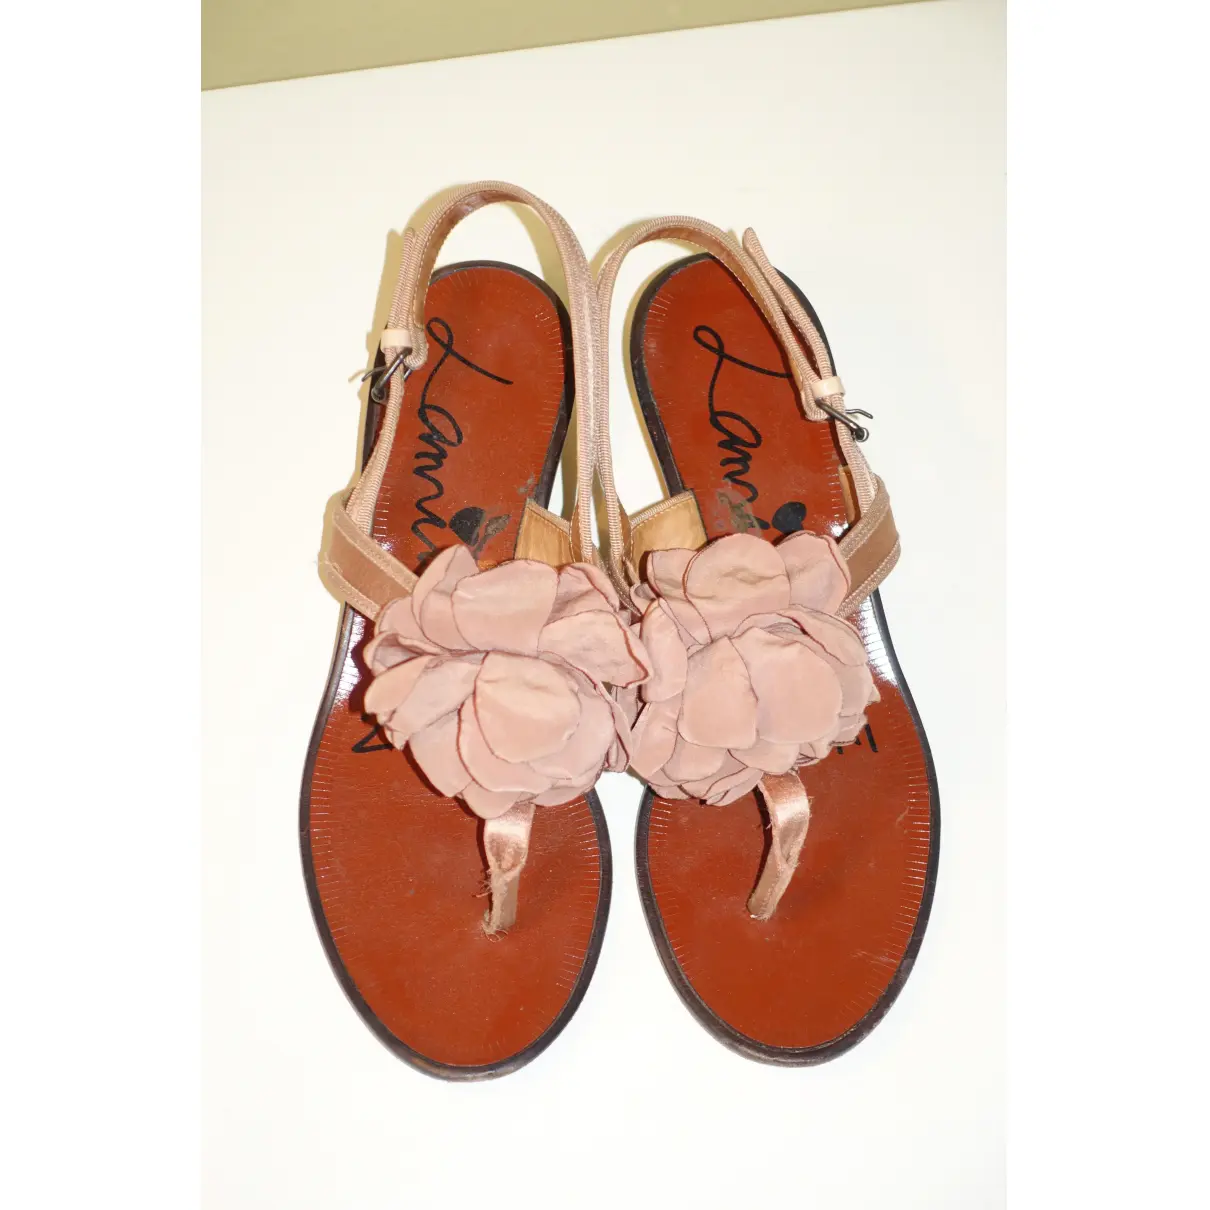 Buy Lanvin Leather sandals online